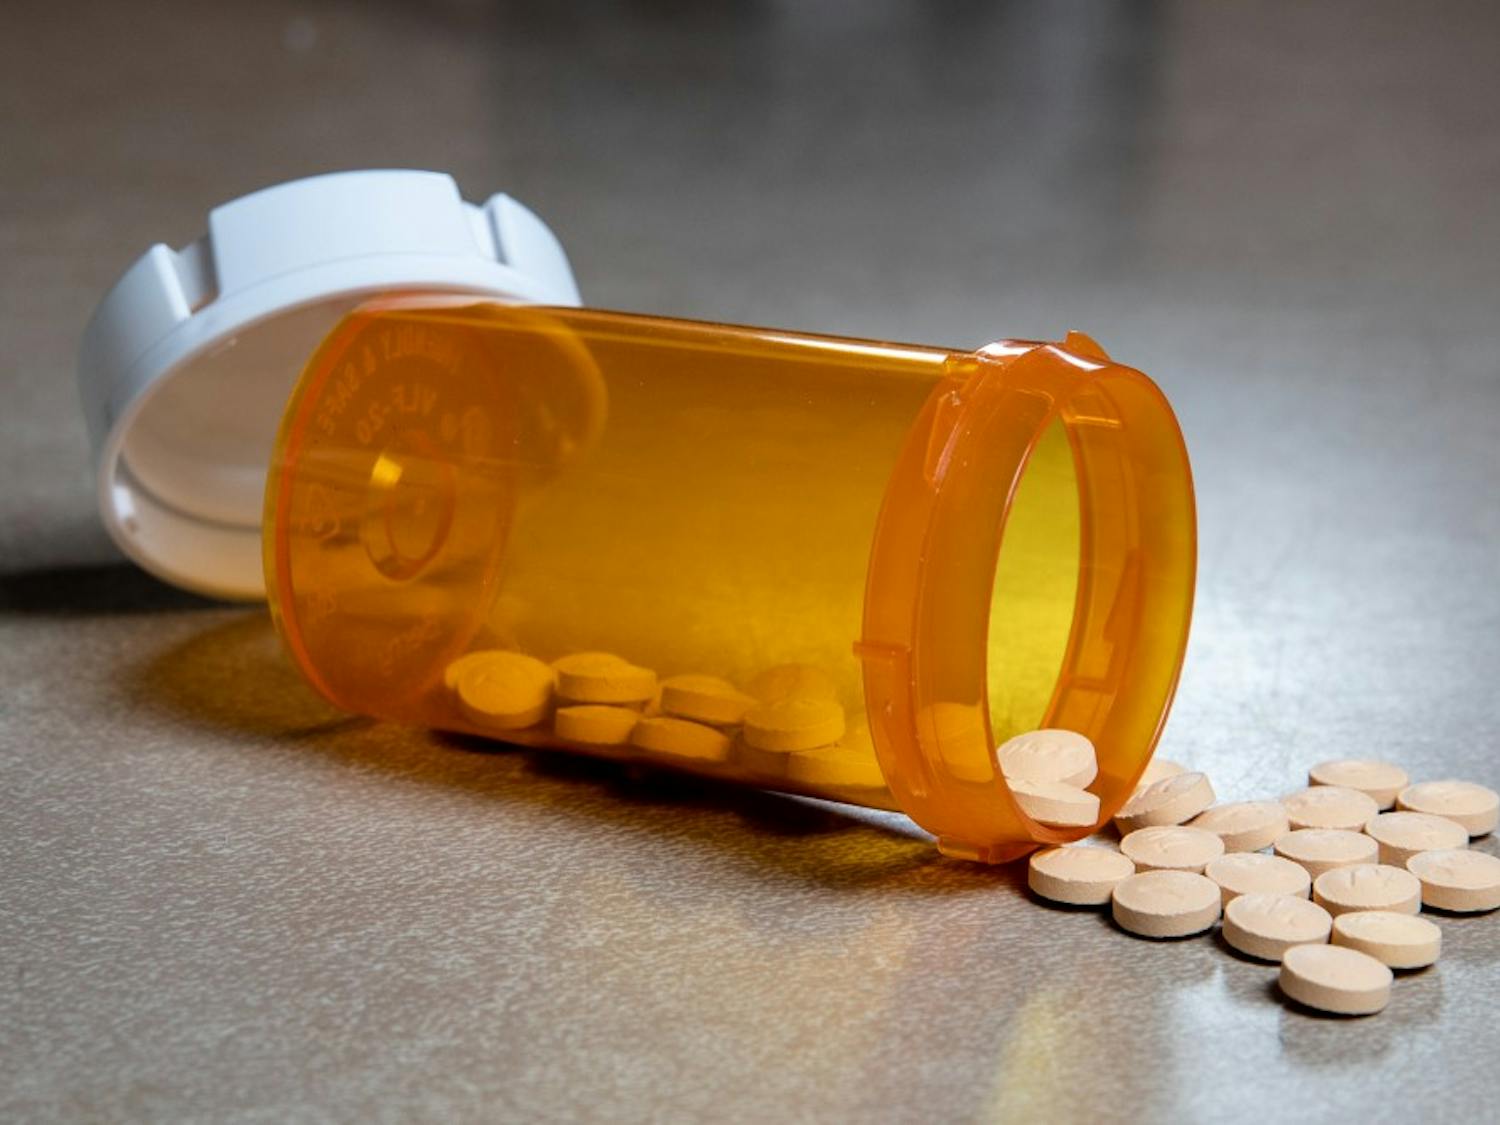 opioid response bill